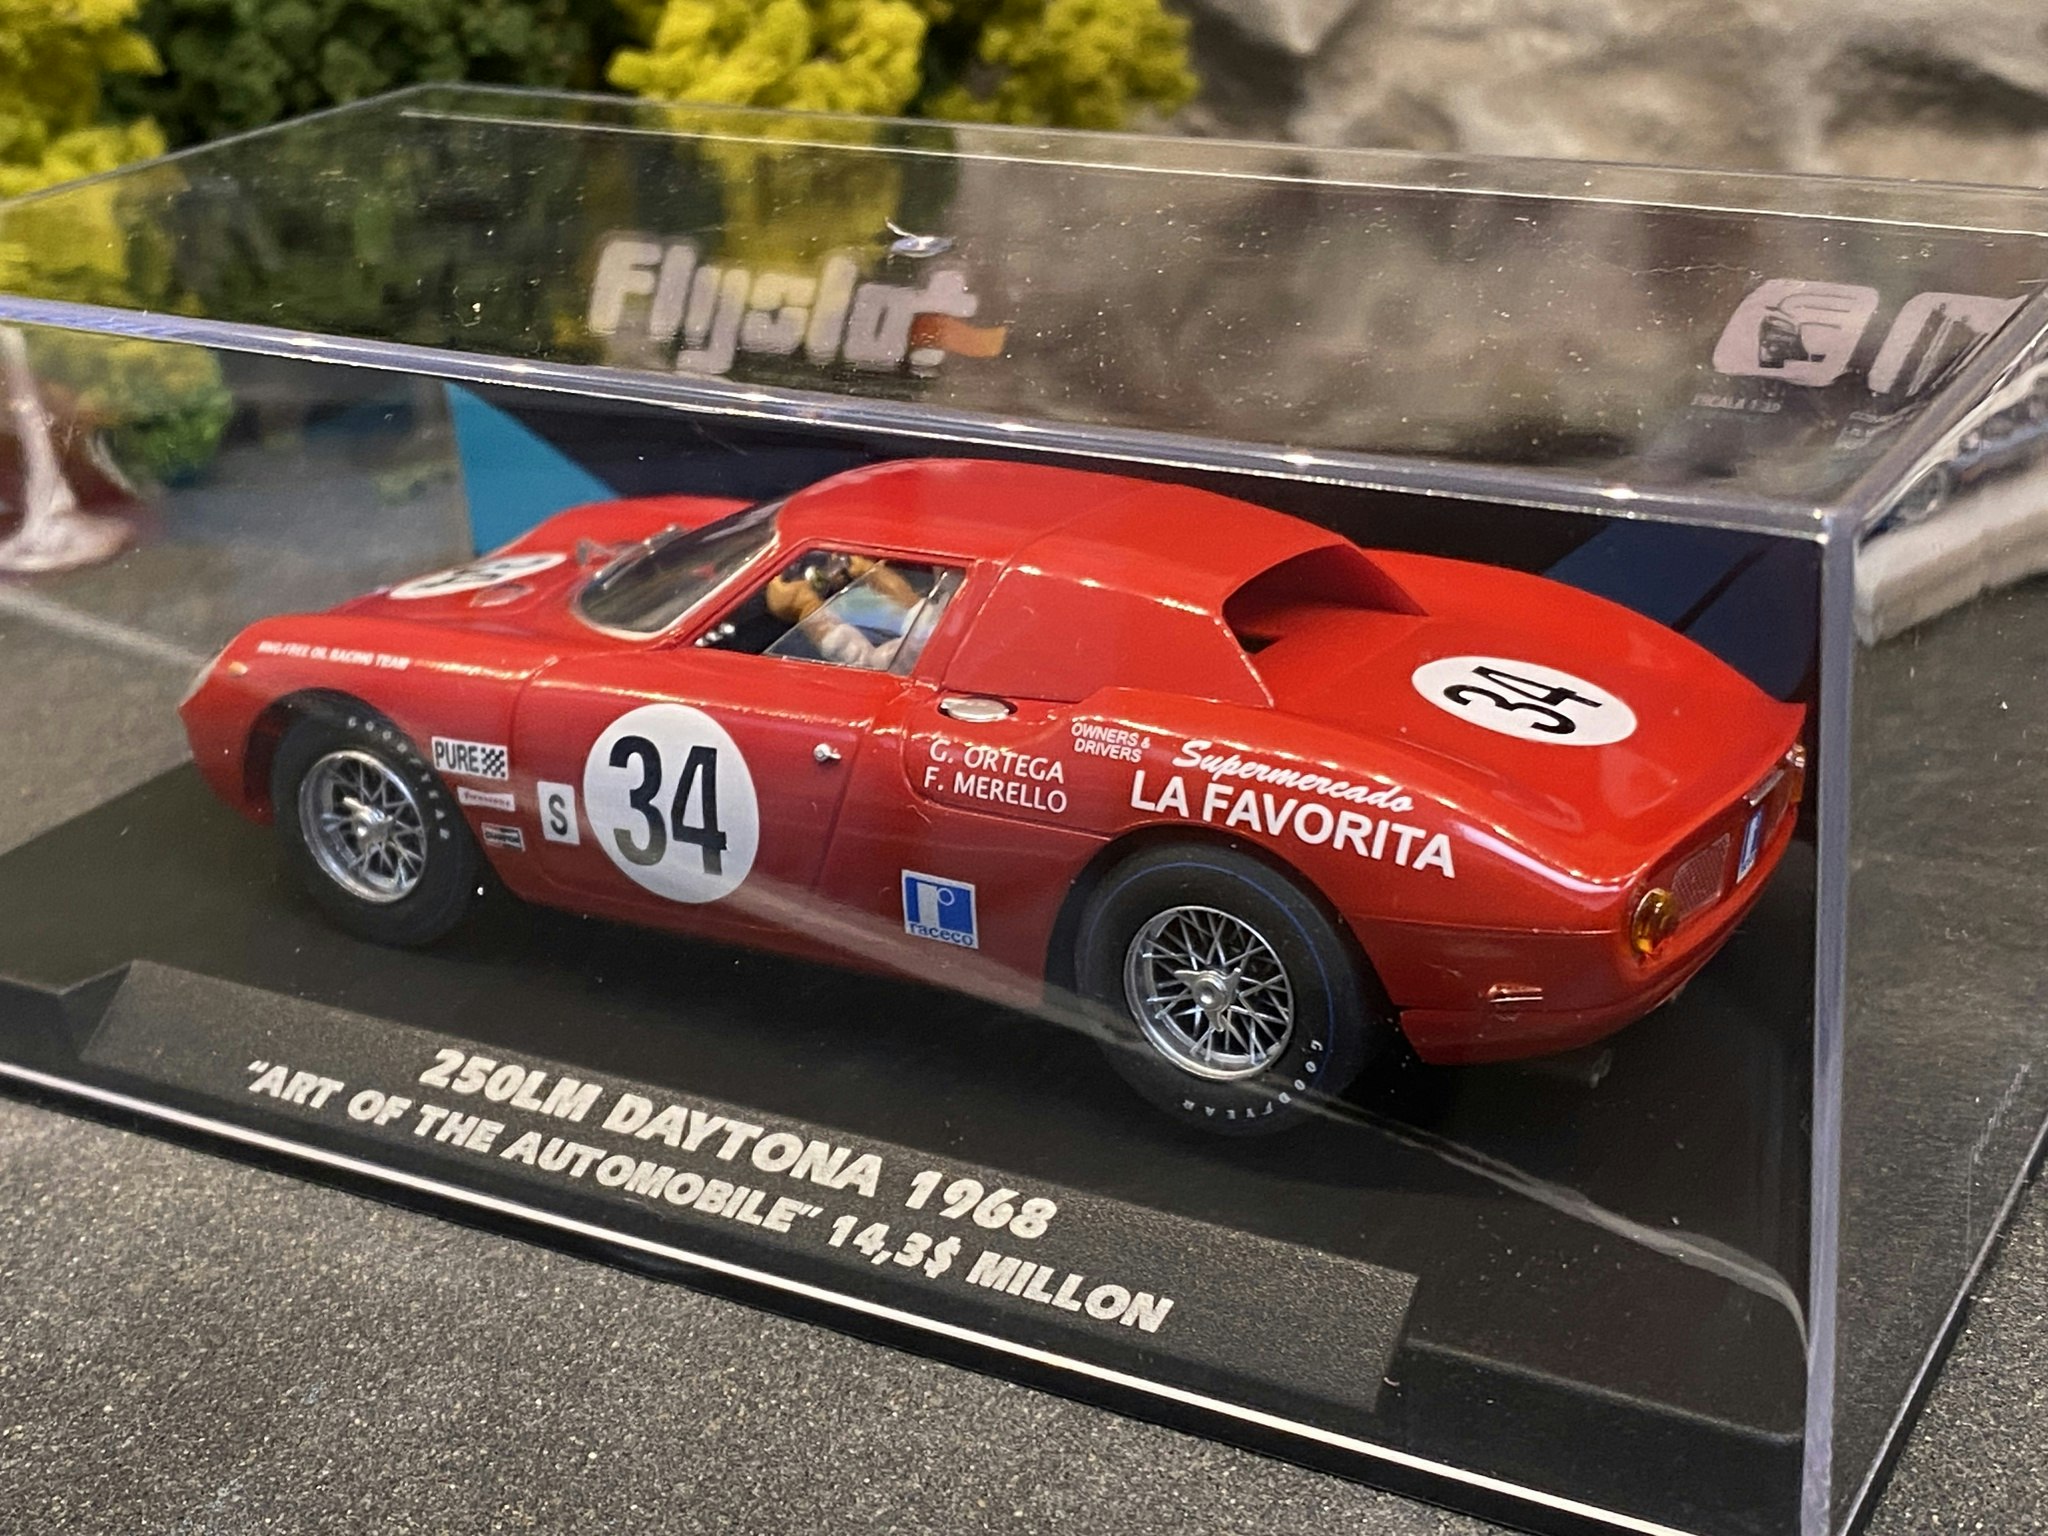 Scale 1/32 Analogue FLY slotcar: 250LM Daytona 1968 - Art of Automobile - 14,4 Million